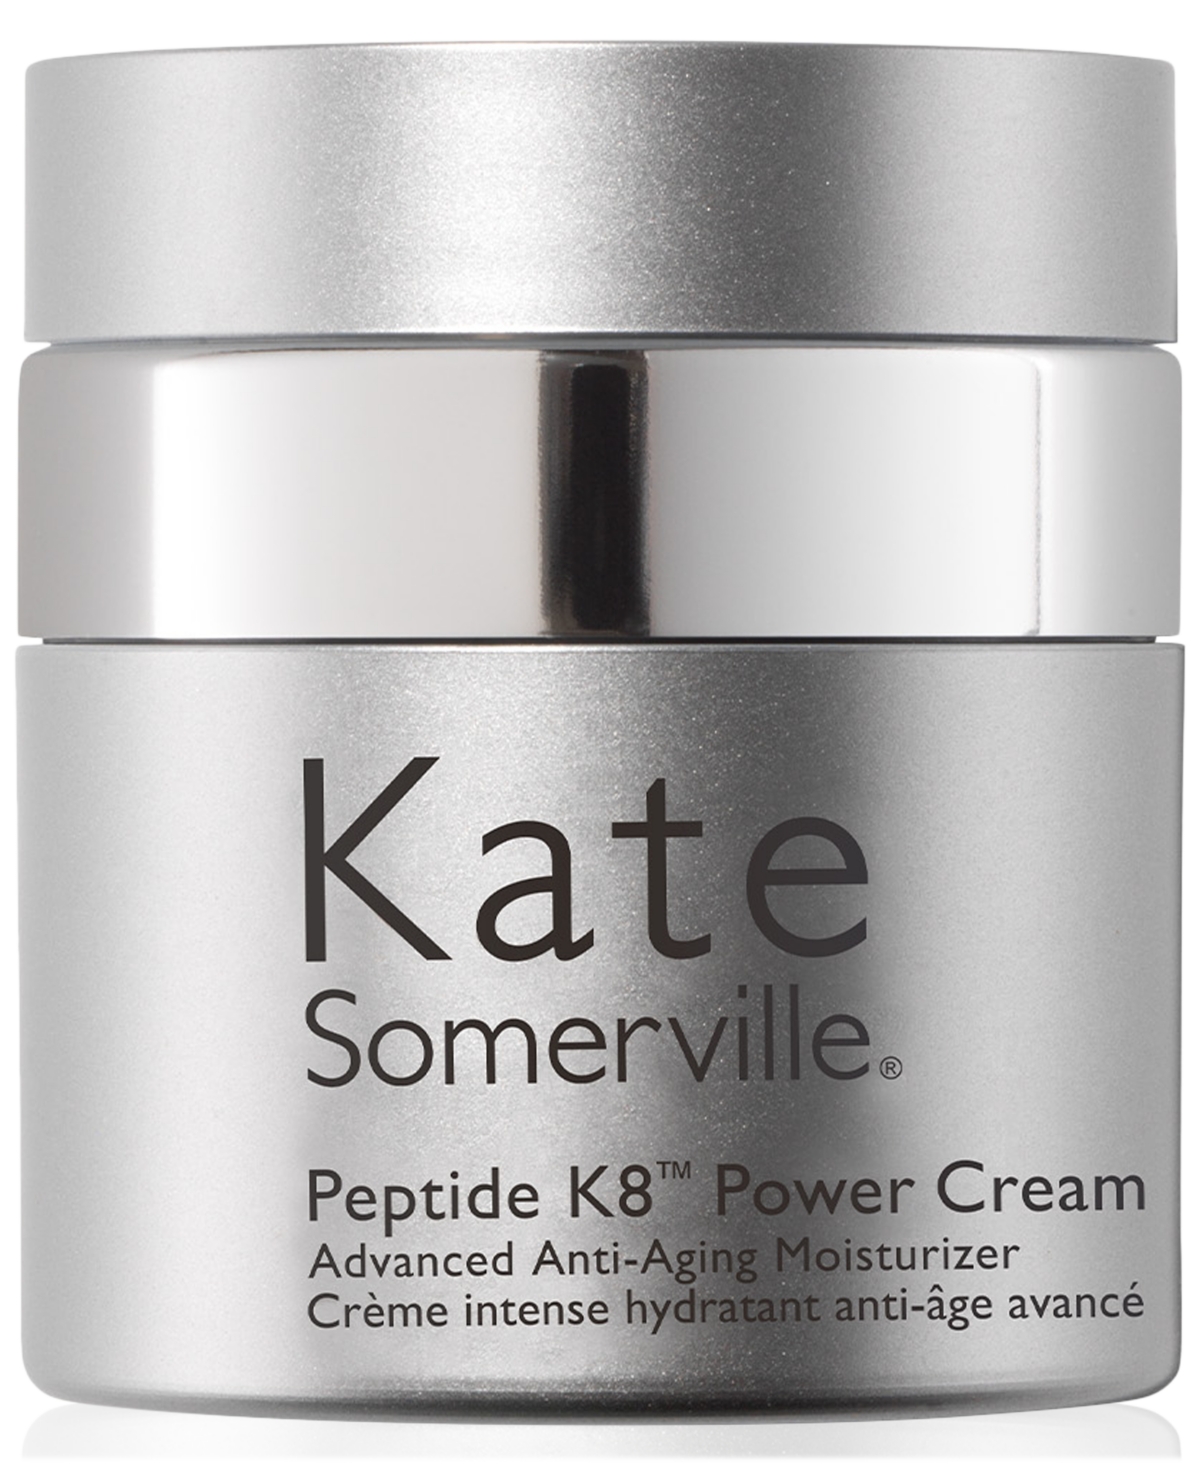 Kate Somerville Peptide K8 Power Cream, 1 Oz. In No Color